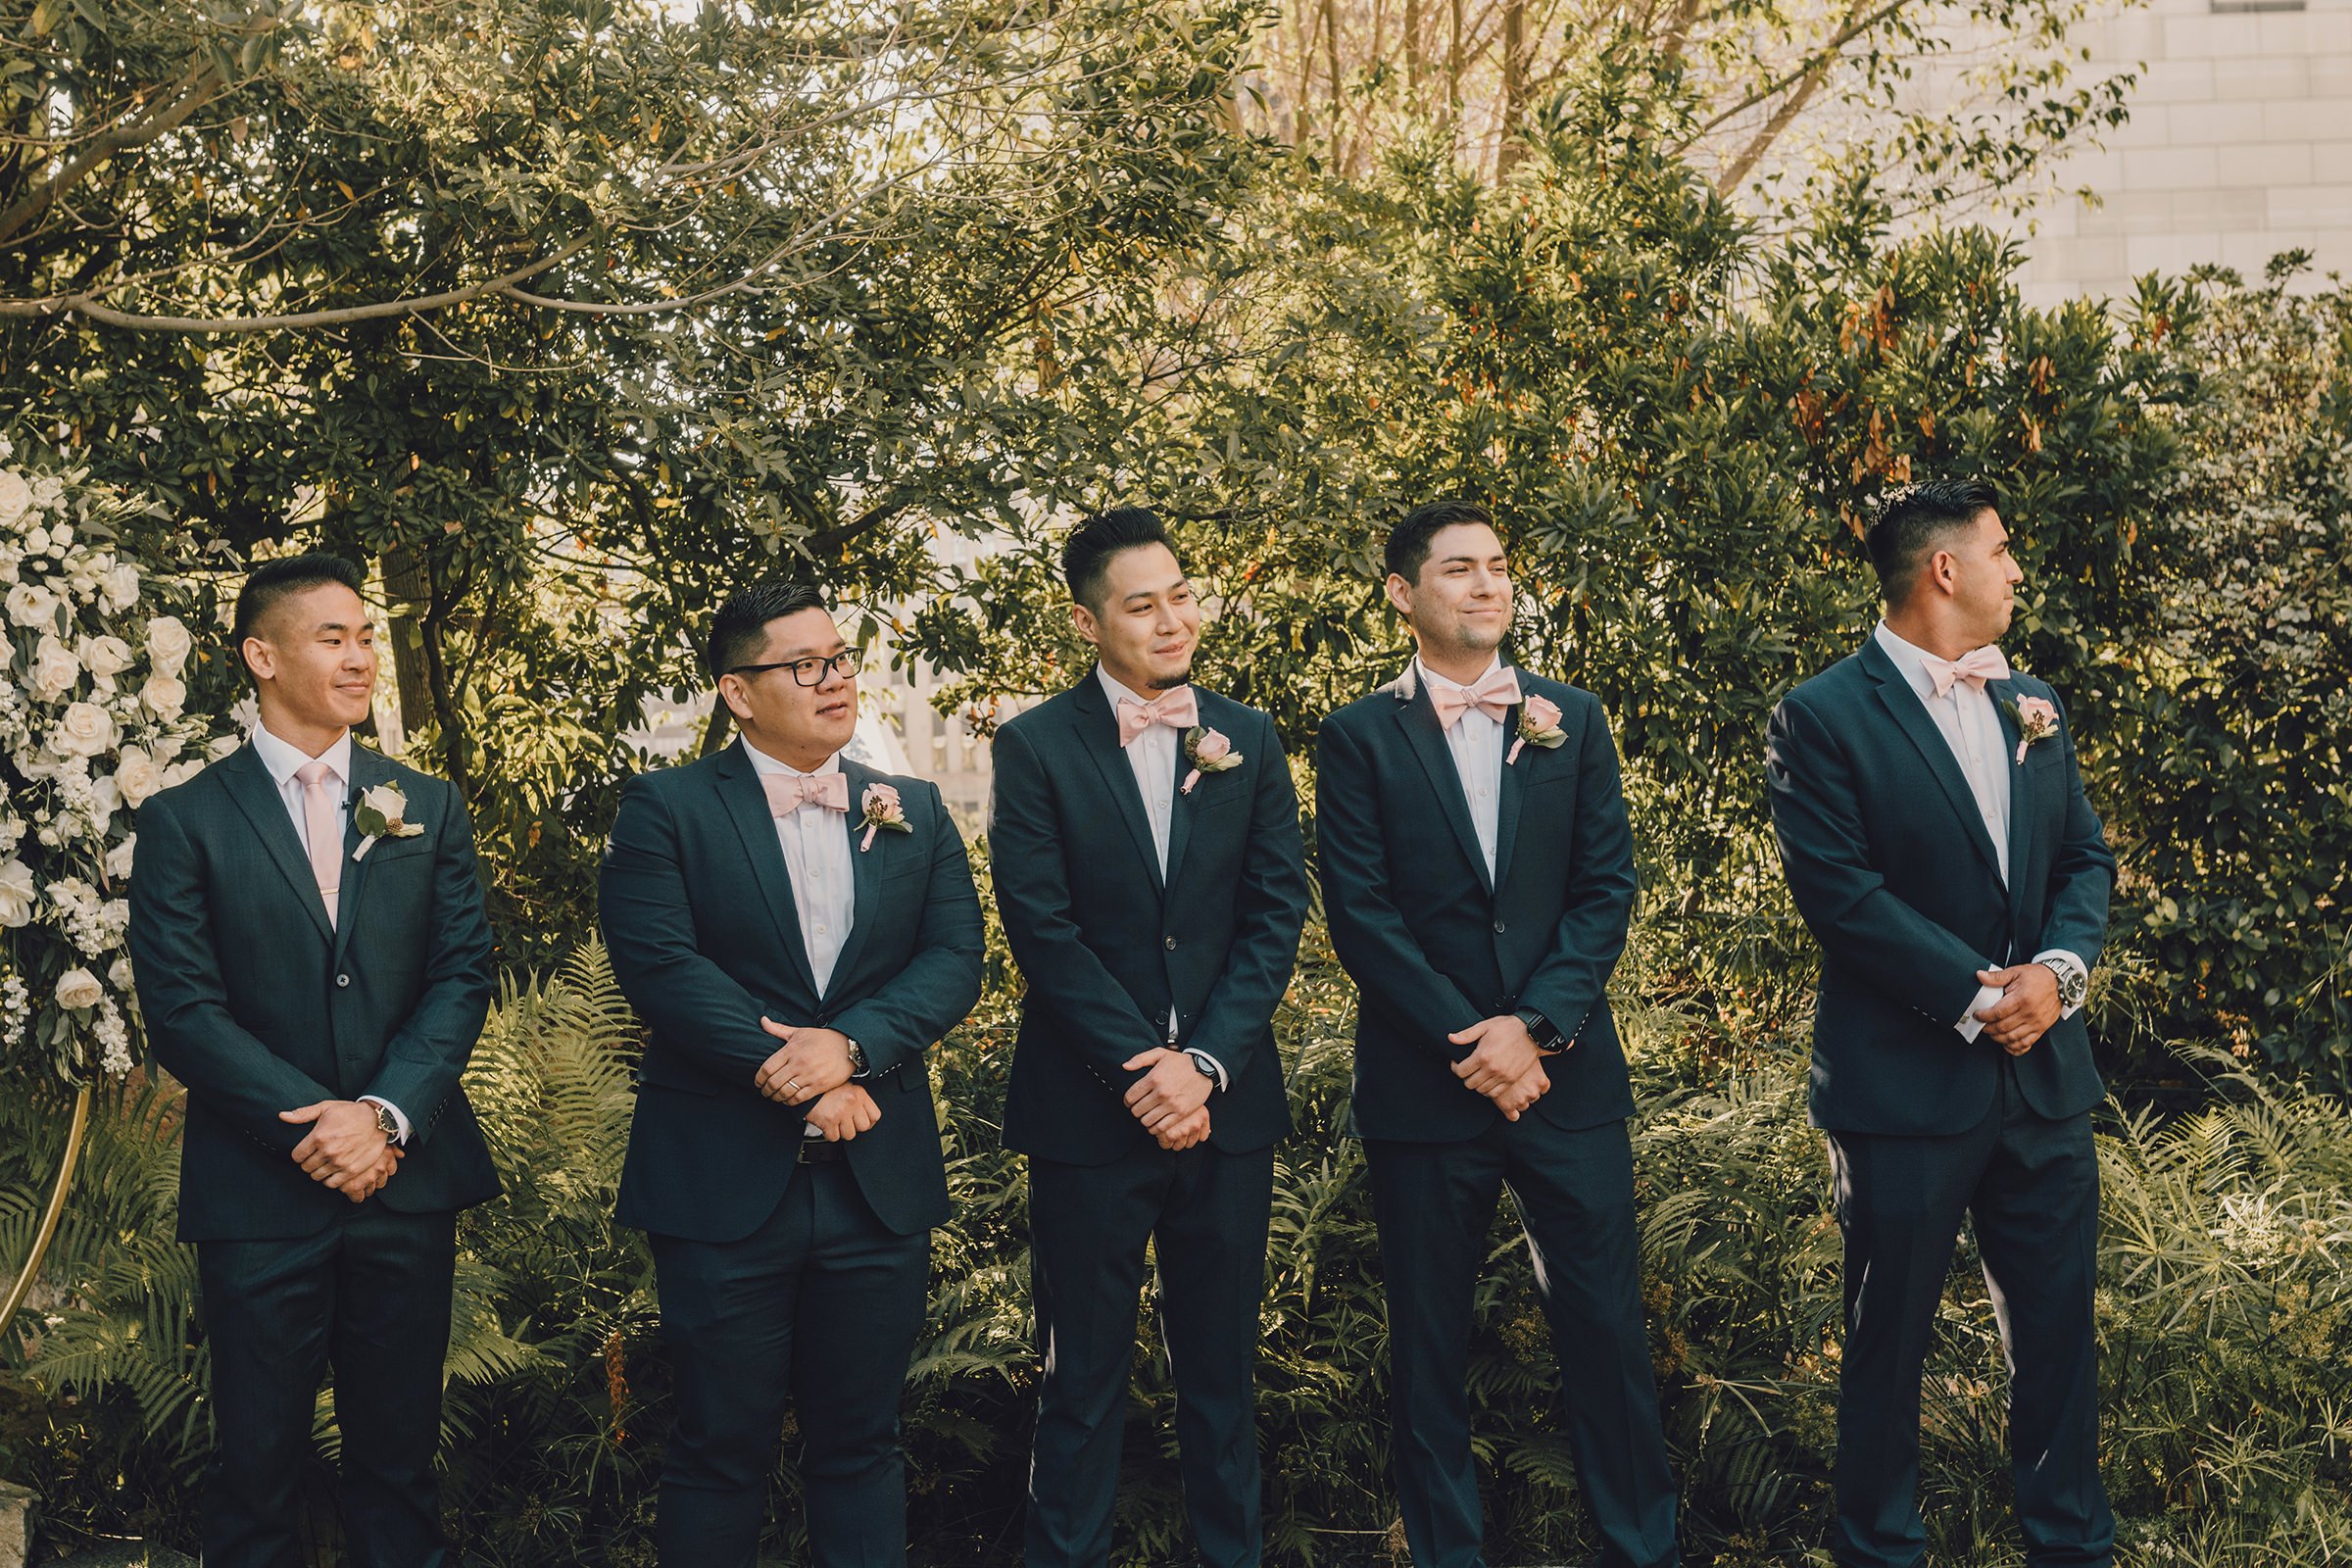 modern-asian-american-wedding-ceremony-los-angeles-socal-photographer-8.jpg